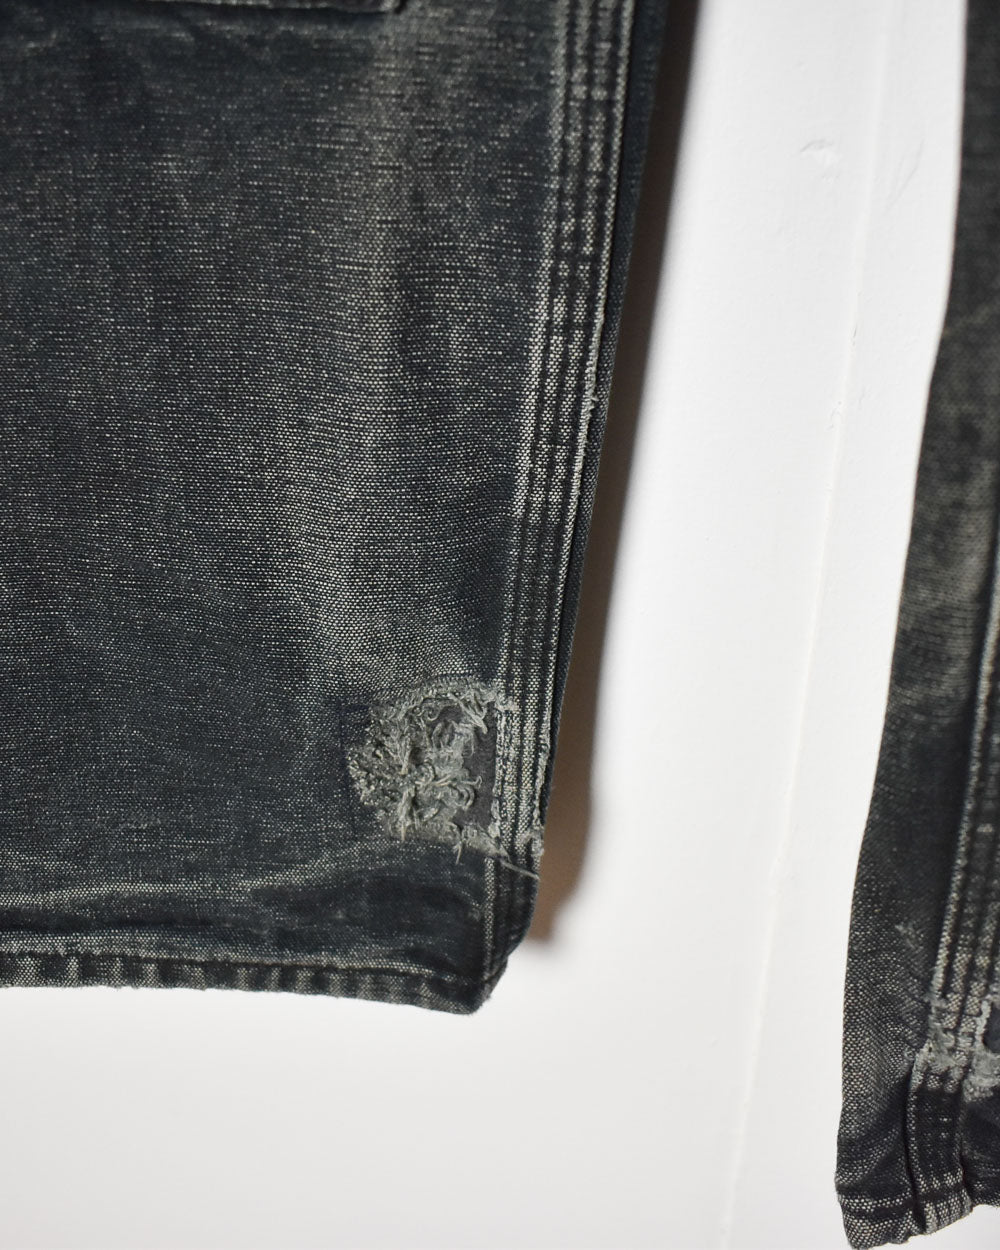 Vintage 90s Black Carhartt Distressed Double Knee Carpenter Jeans - W34 L32  – Domno Vintage